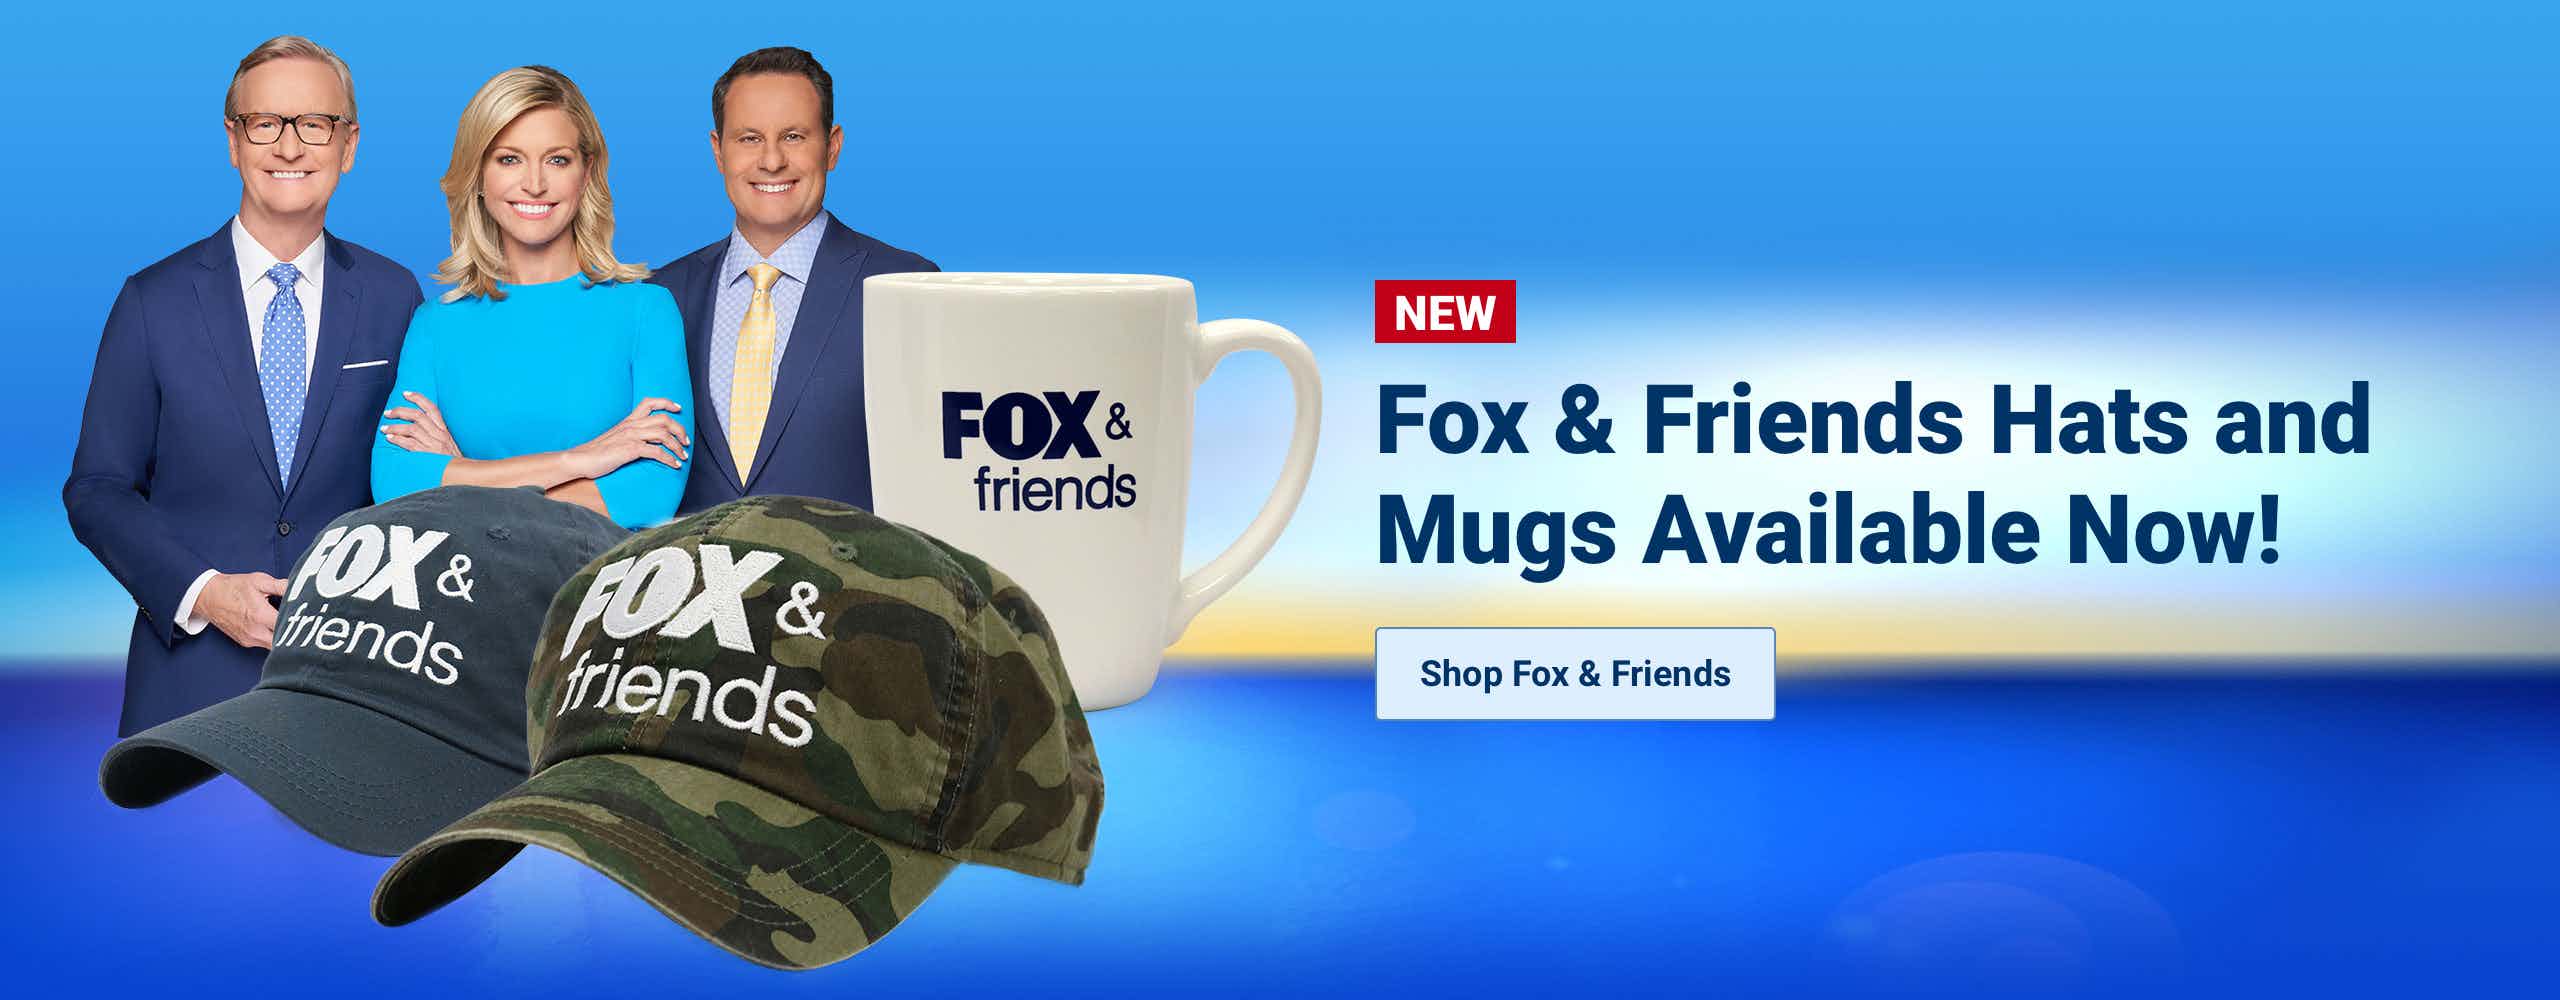 Fox & Friends Hats and Mugs